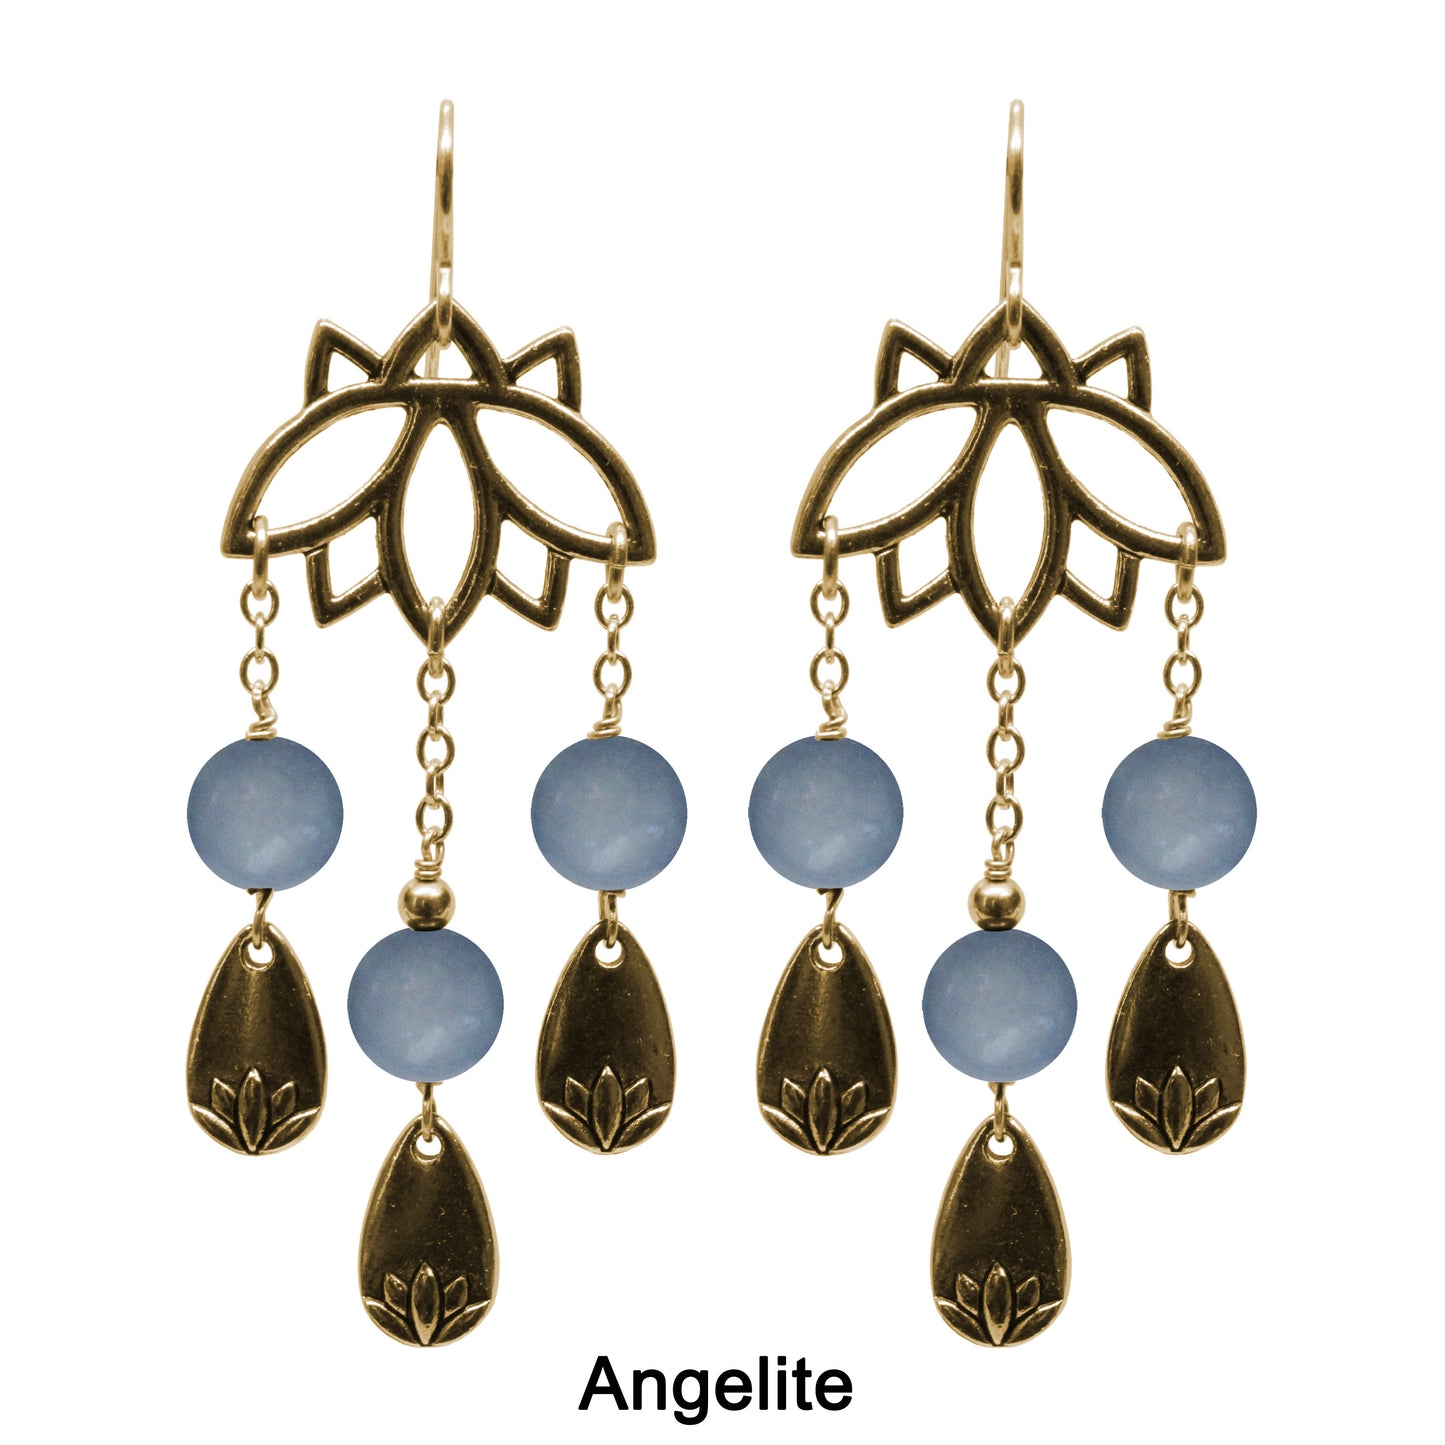 Lotus Earrings / 67mm length / gold filled earwires / choose from angelite, apatite, carnelian, garnet, malachite or pink opal